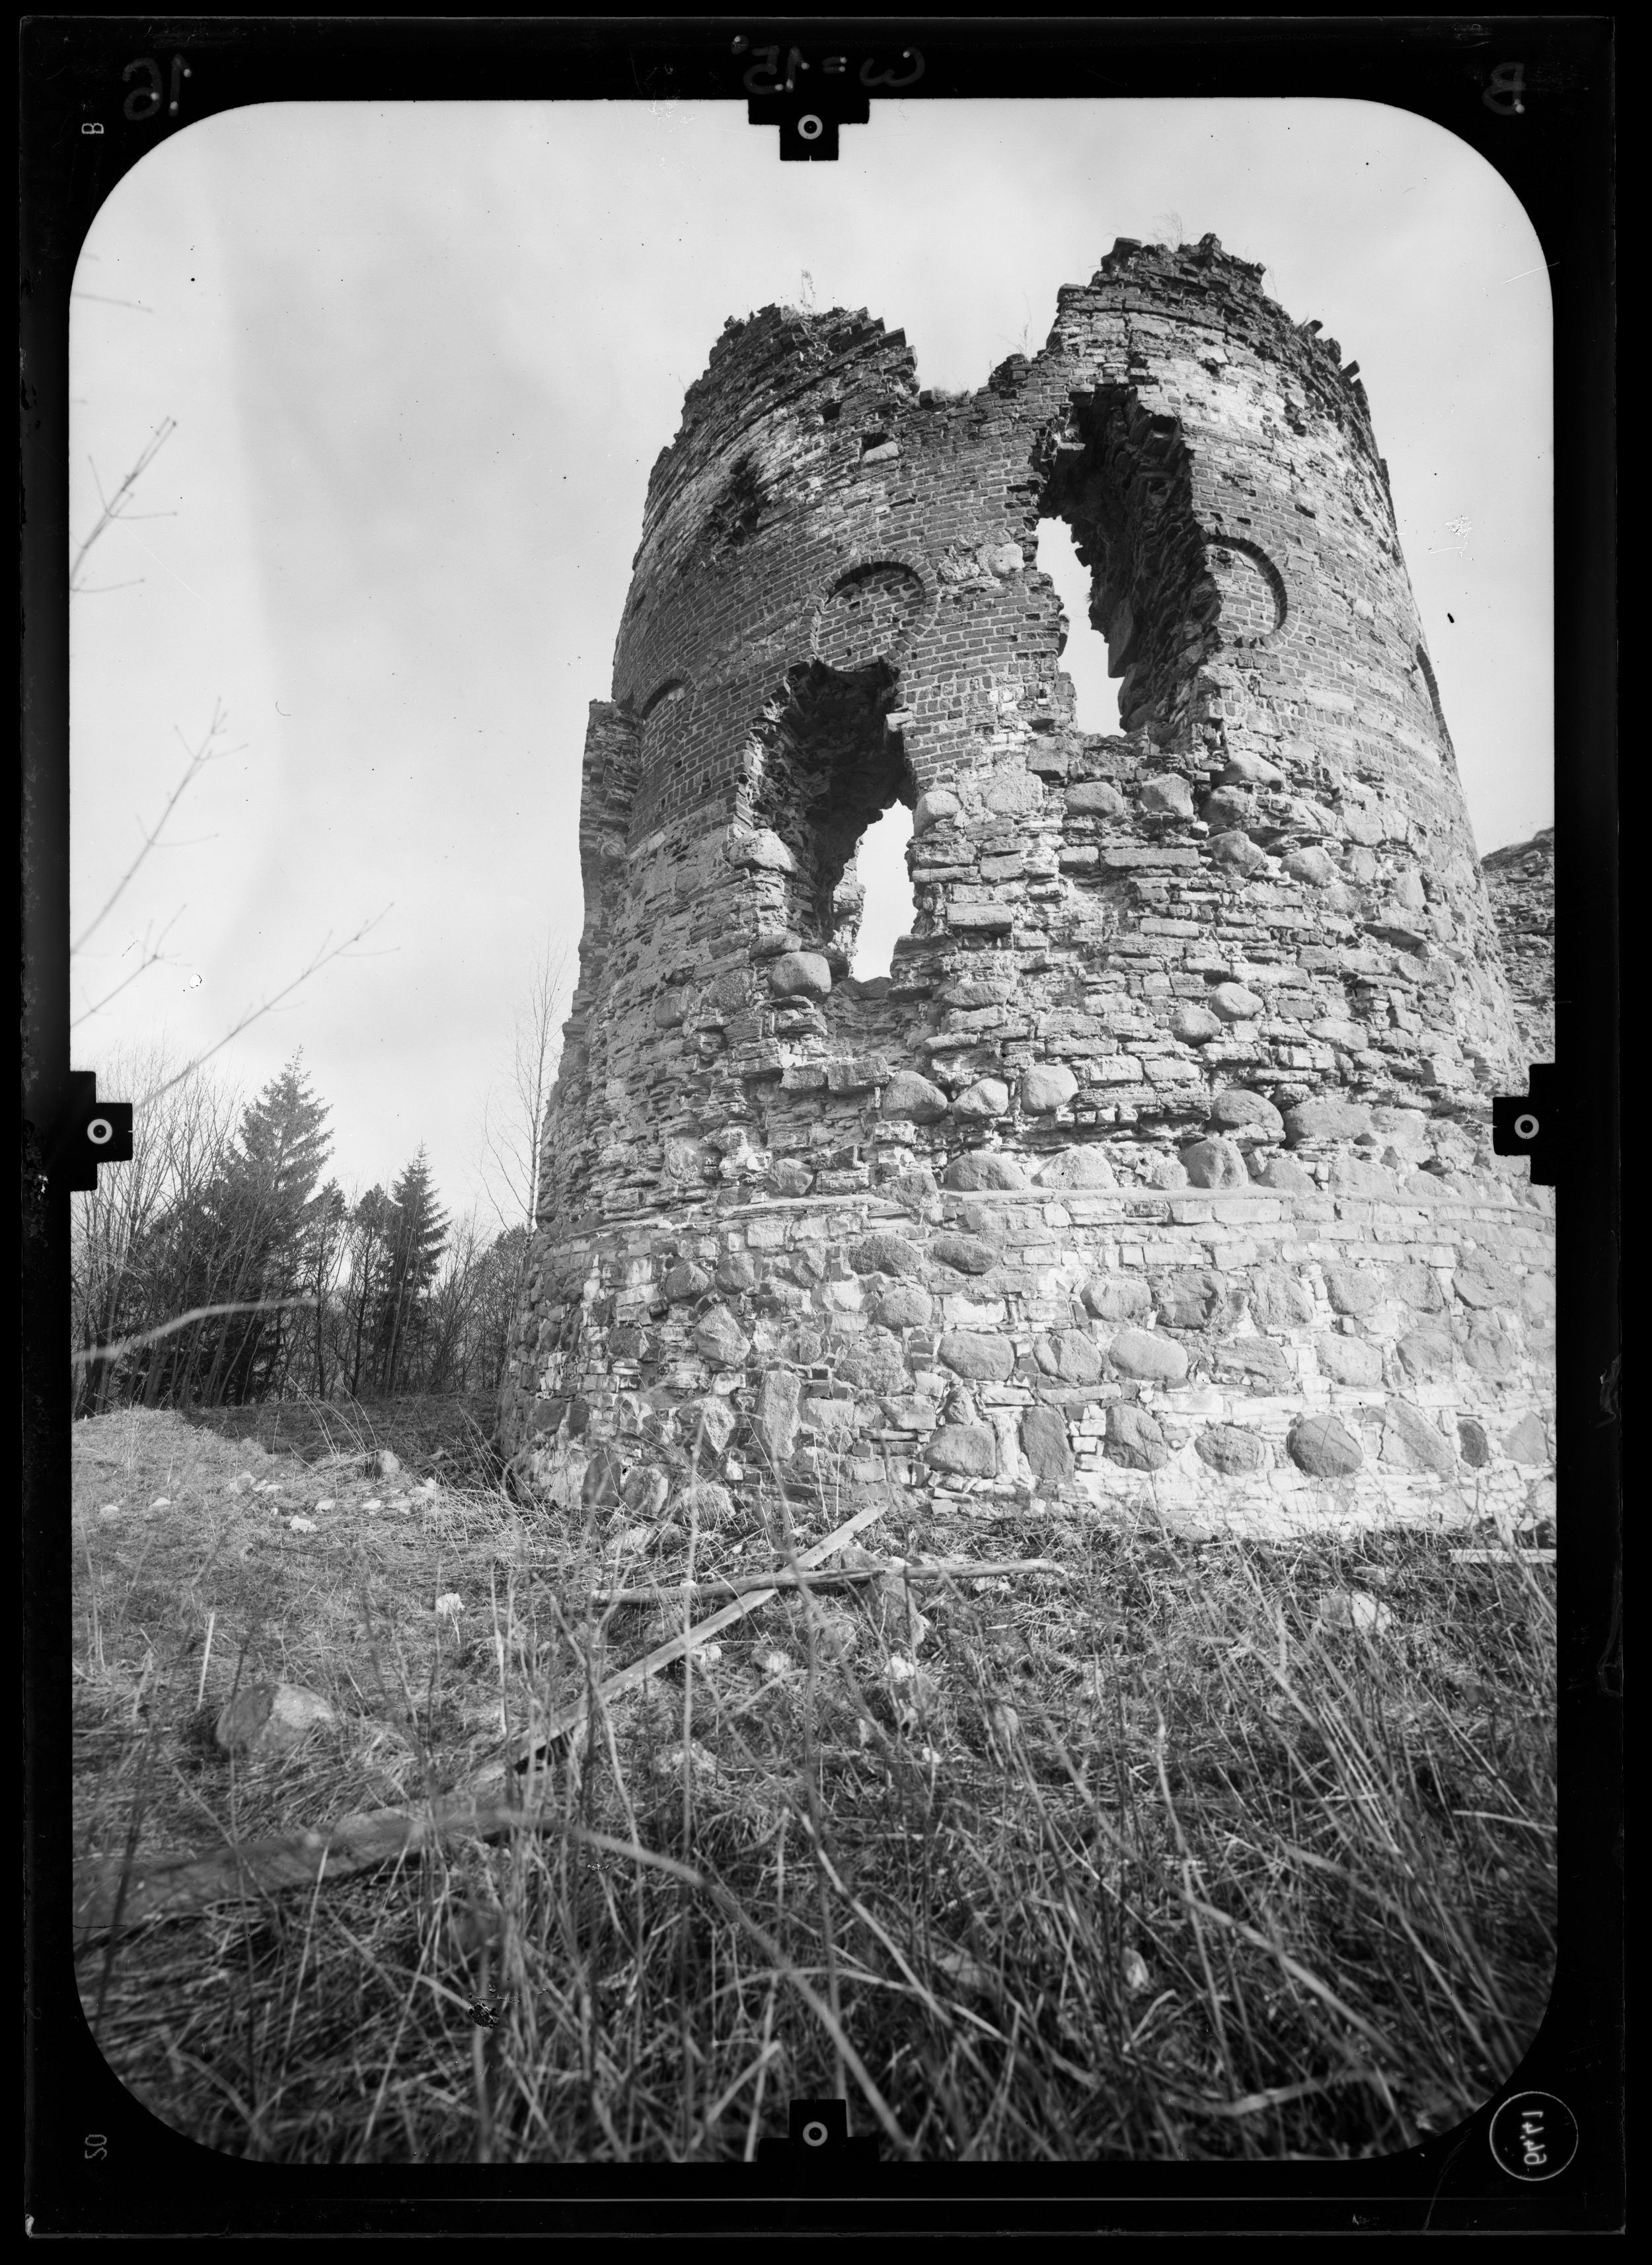 Vastseliina fortress B16-15 - Vastseliina Bishop Castle and fortress. Photogrammetric survey 1991